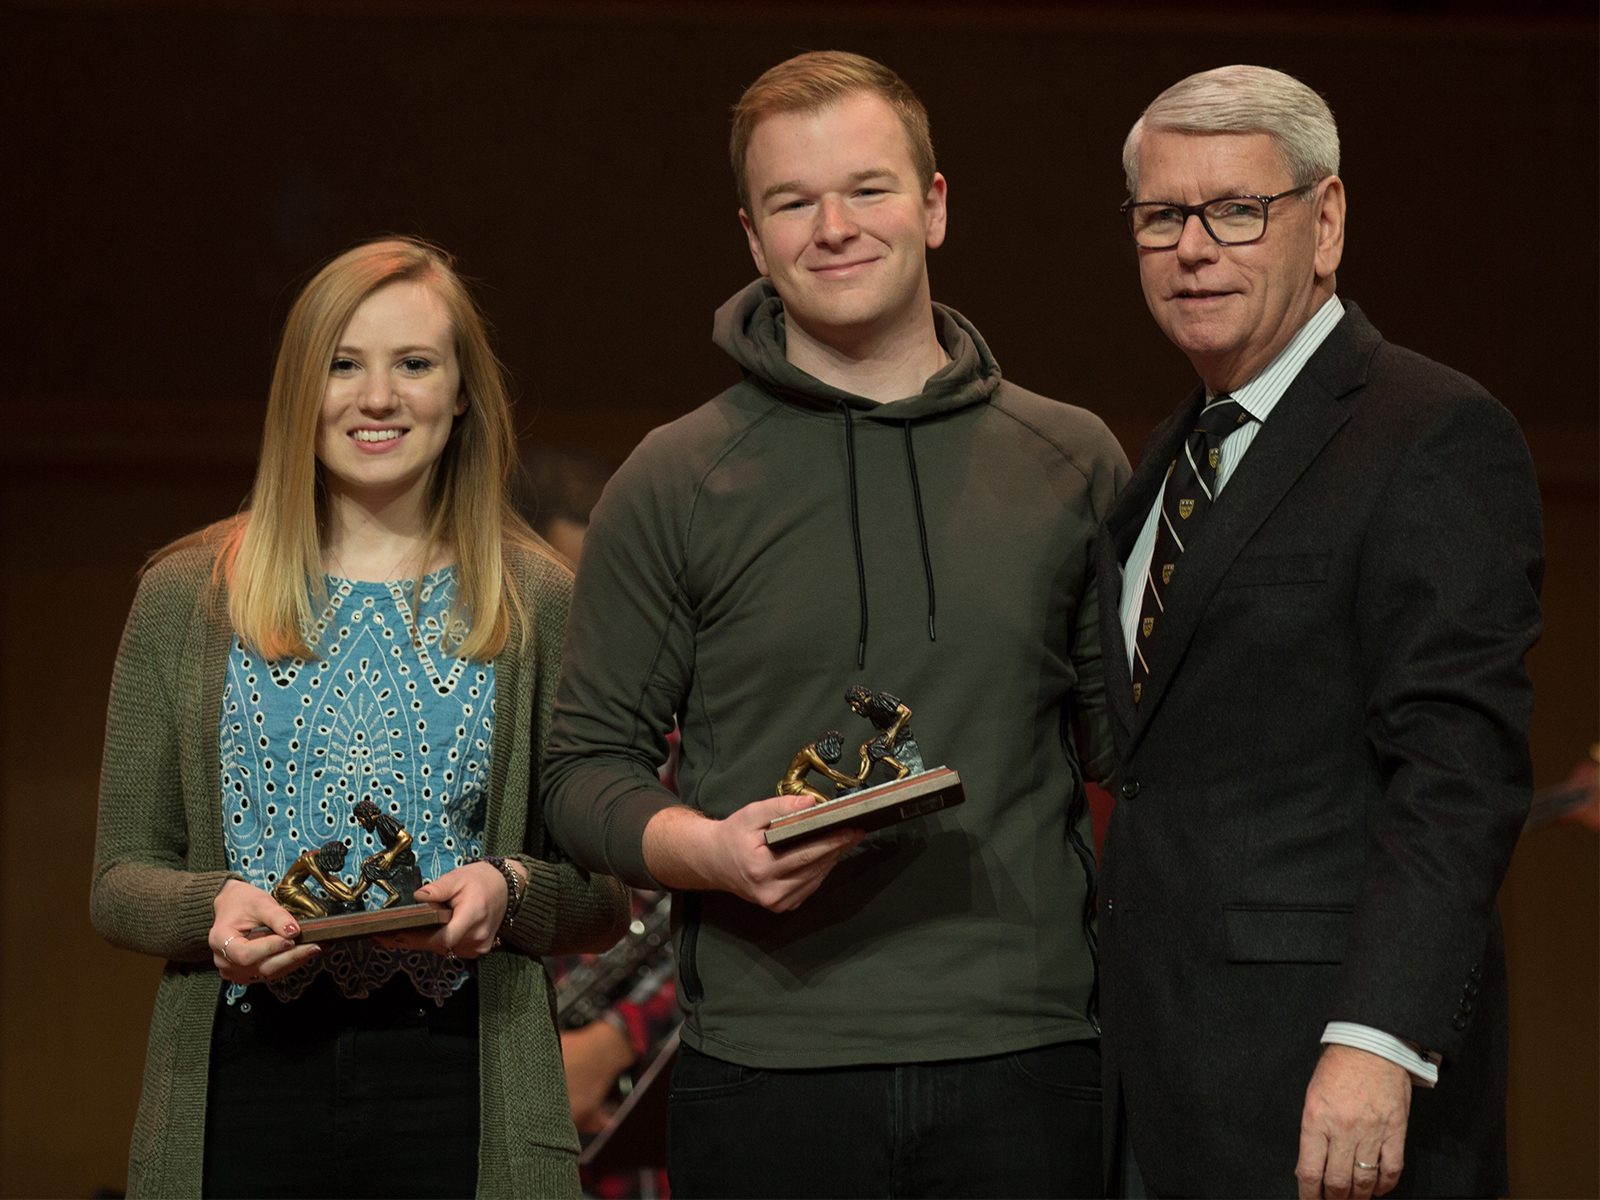 Olivet students_2018 Servant Leadership Awards_Web.jpg